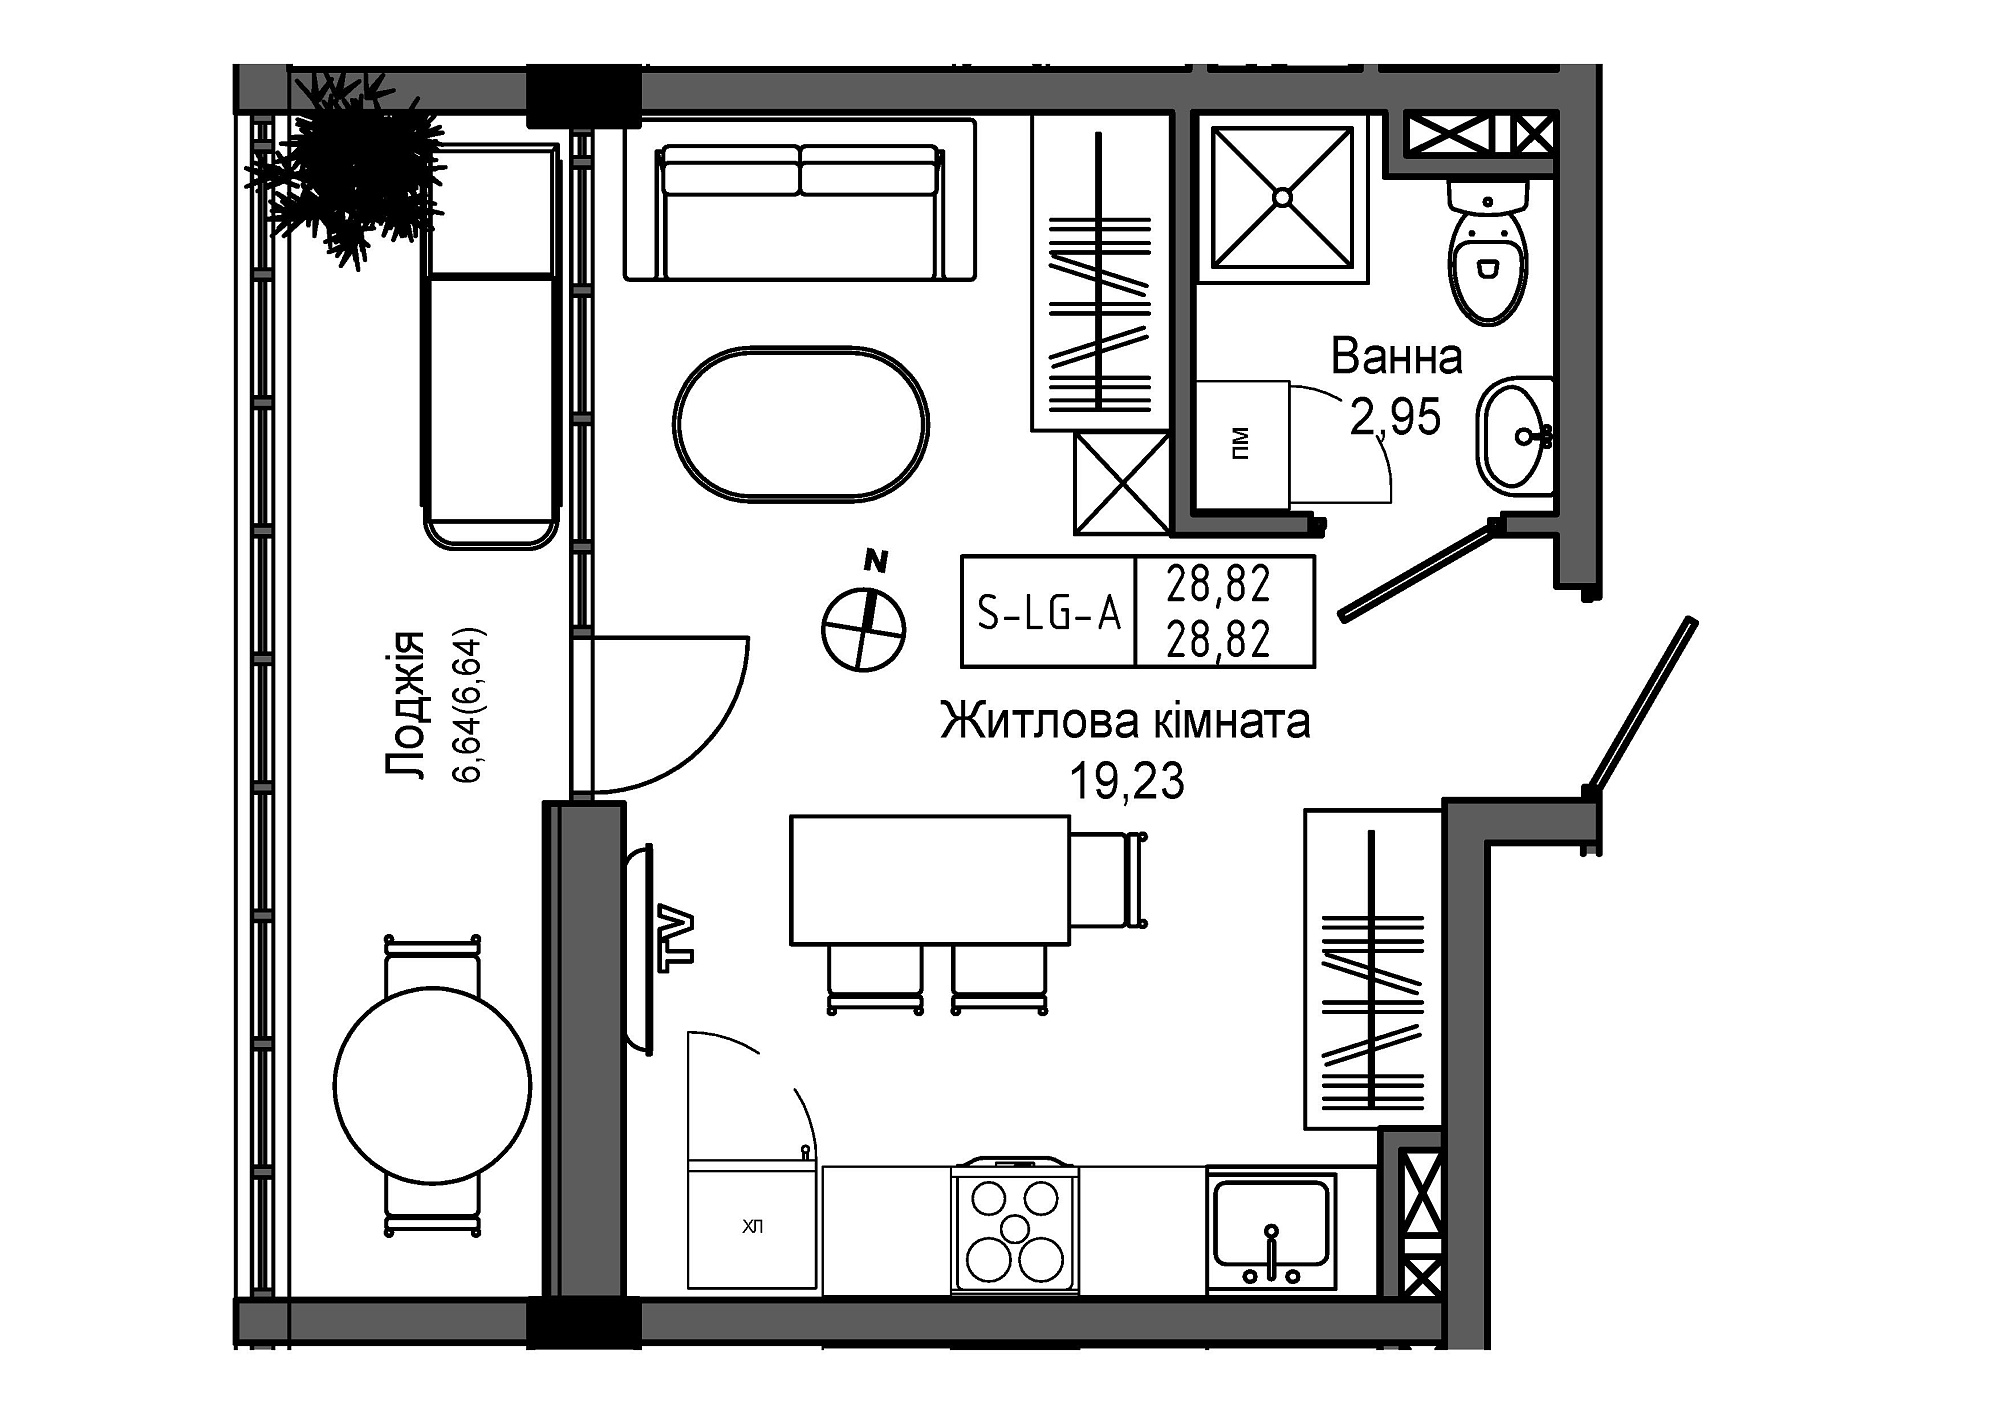 Planning Smart flats area 28.82m2, UM-006-00/0009.